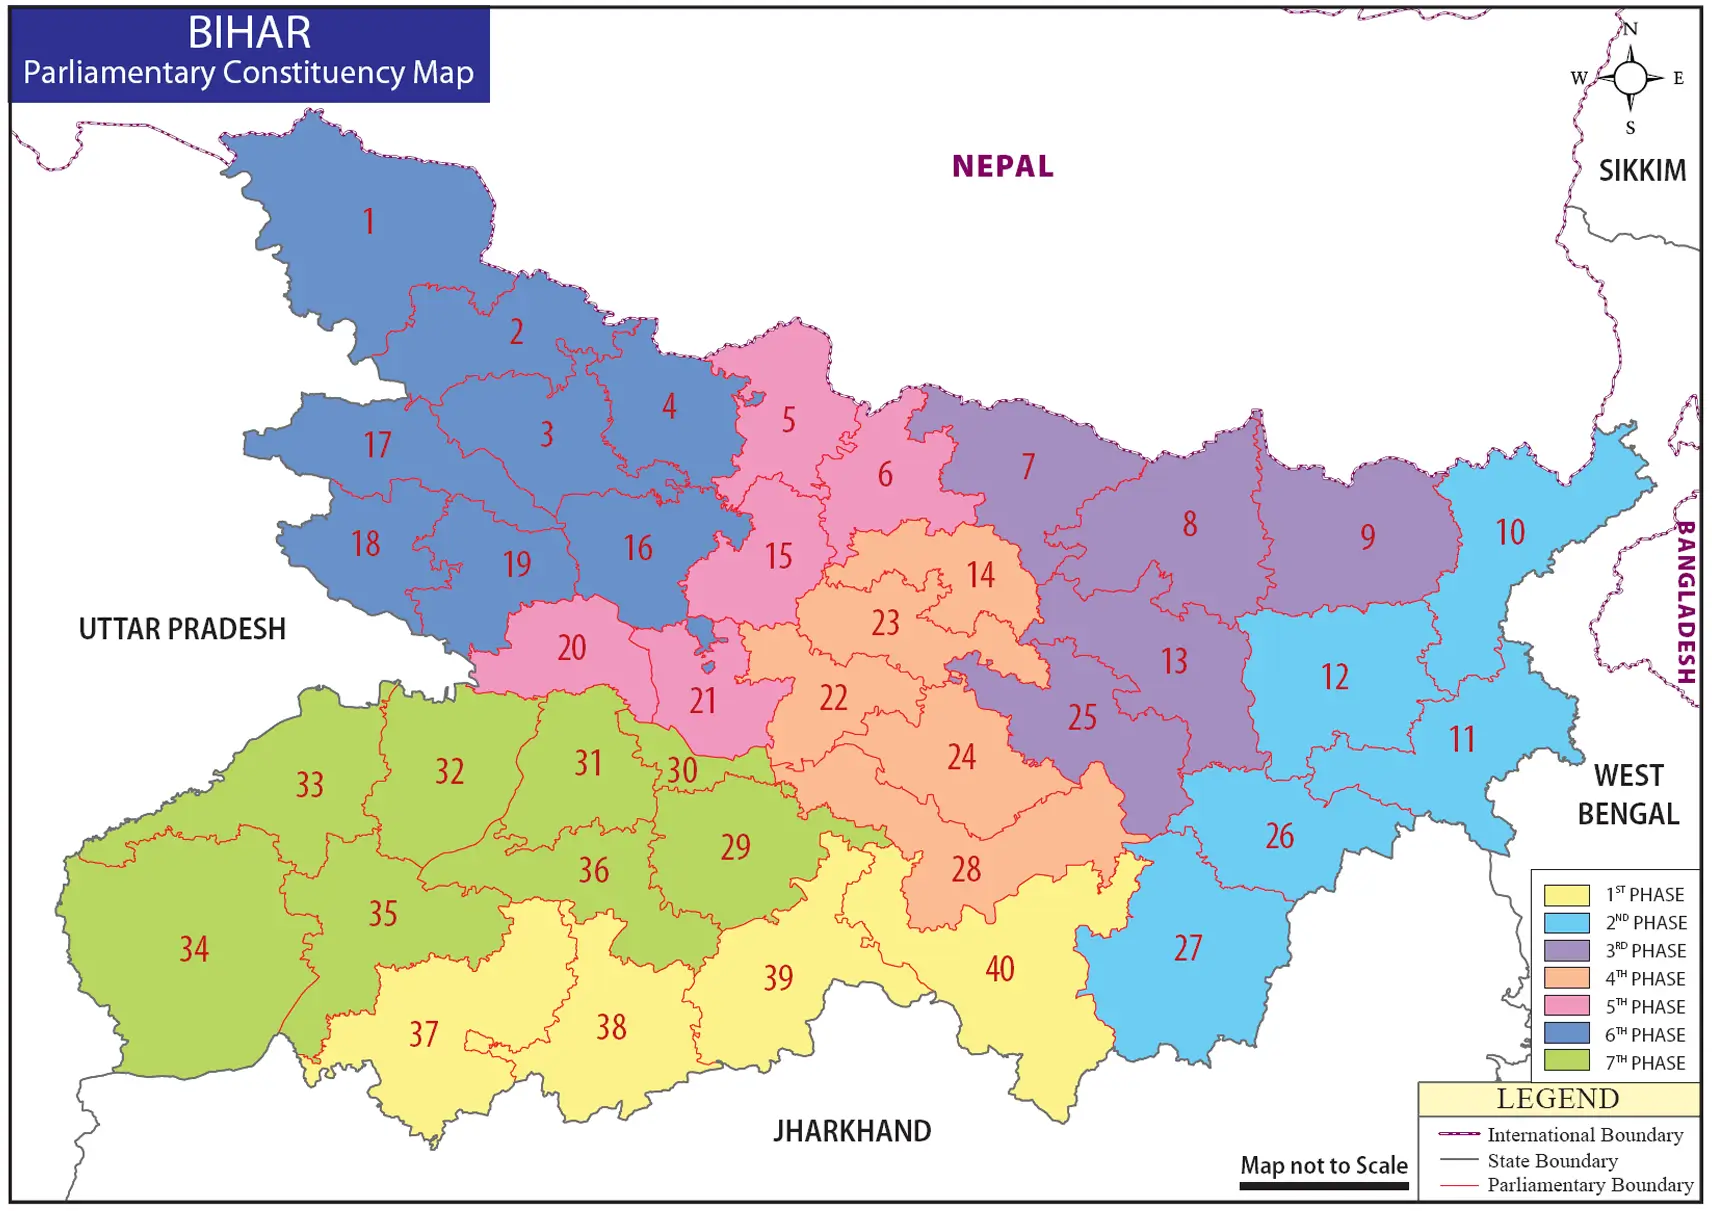 Bihar Parliamentary Constituency Map